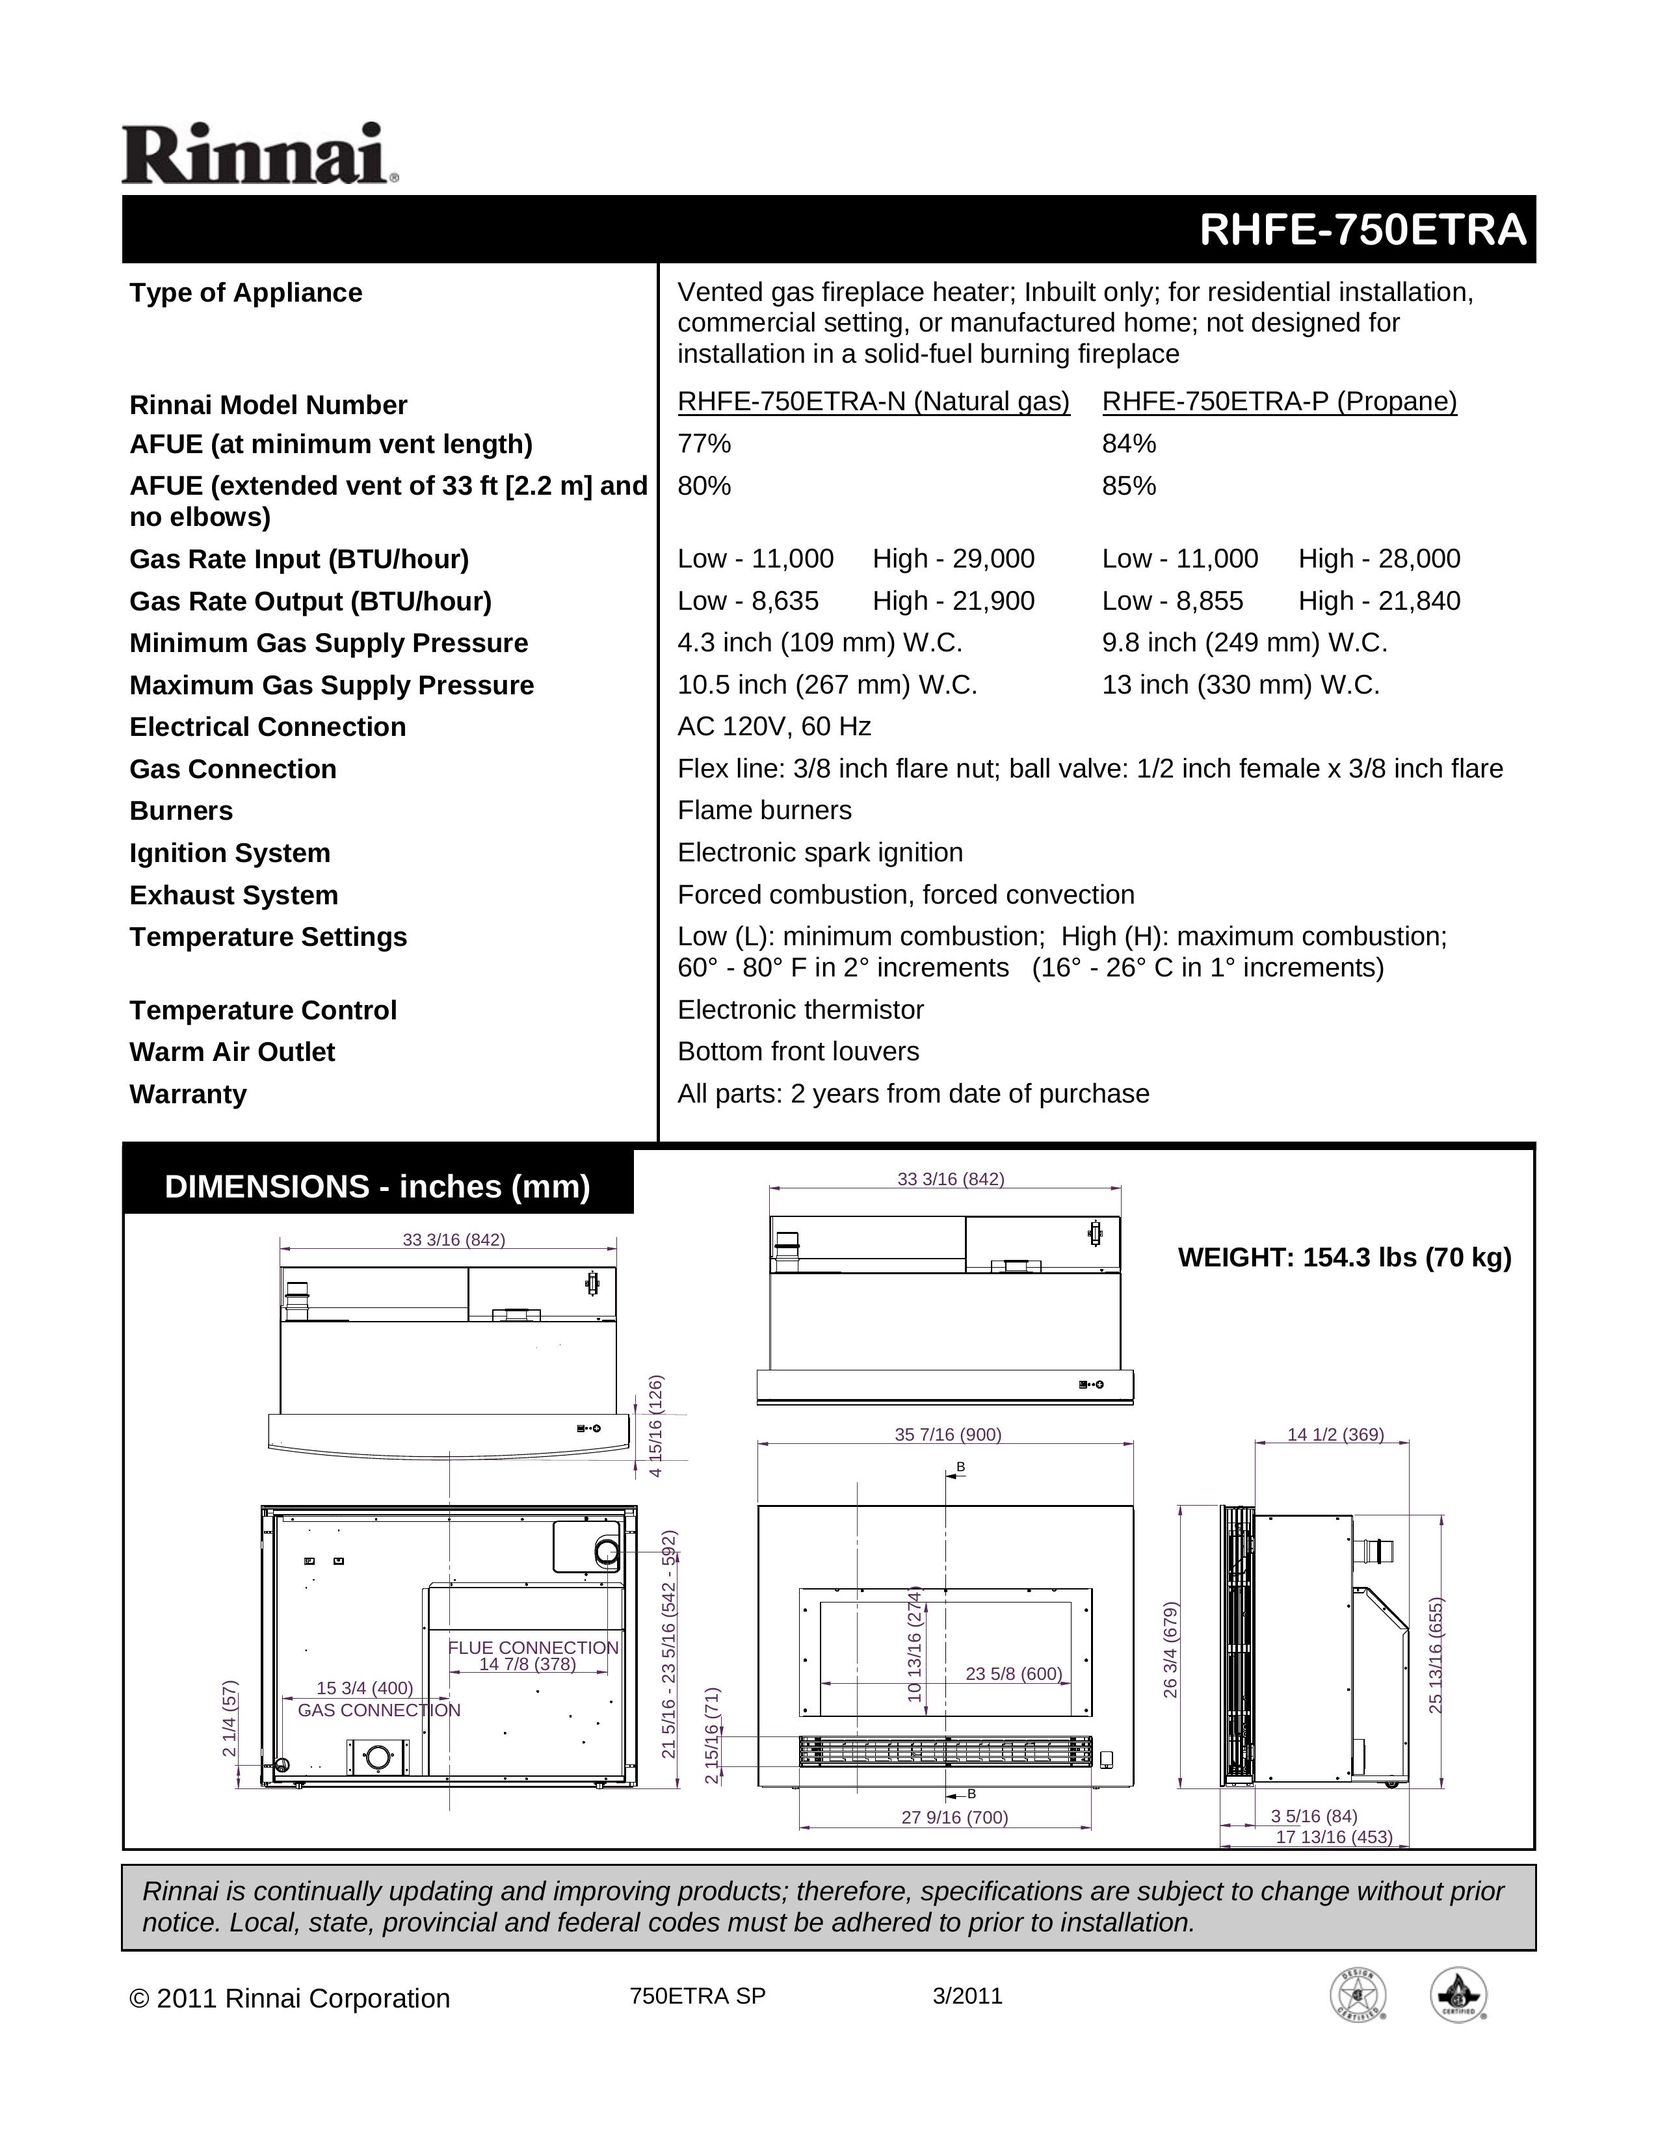 Rinnai RHFE-750ETRA-P Indoor Fireplace User Manual